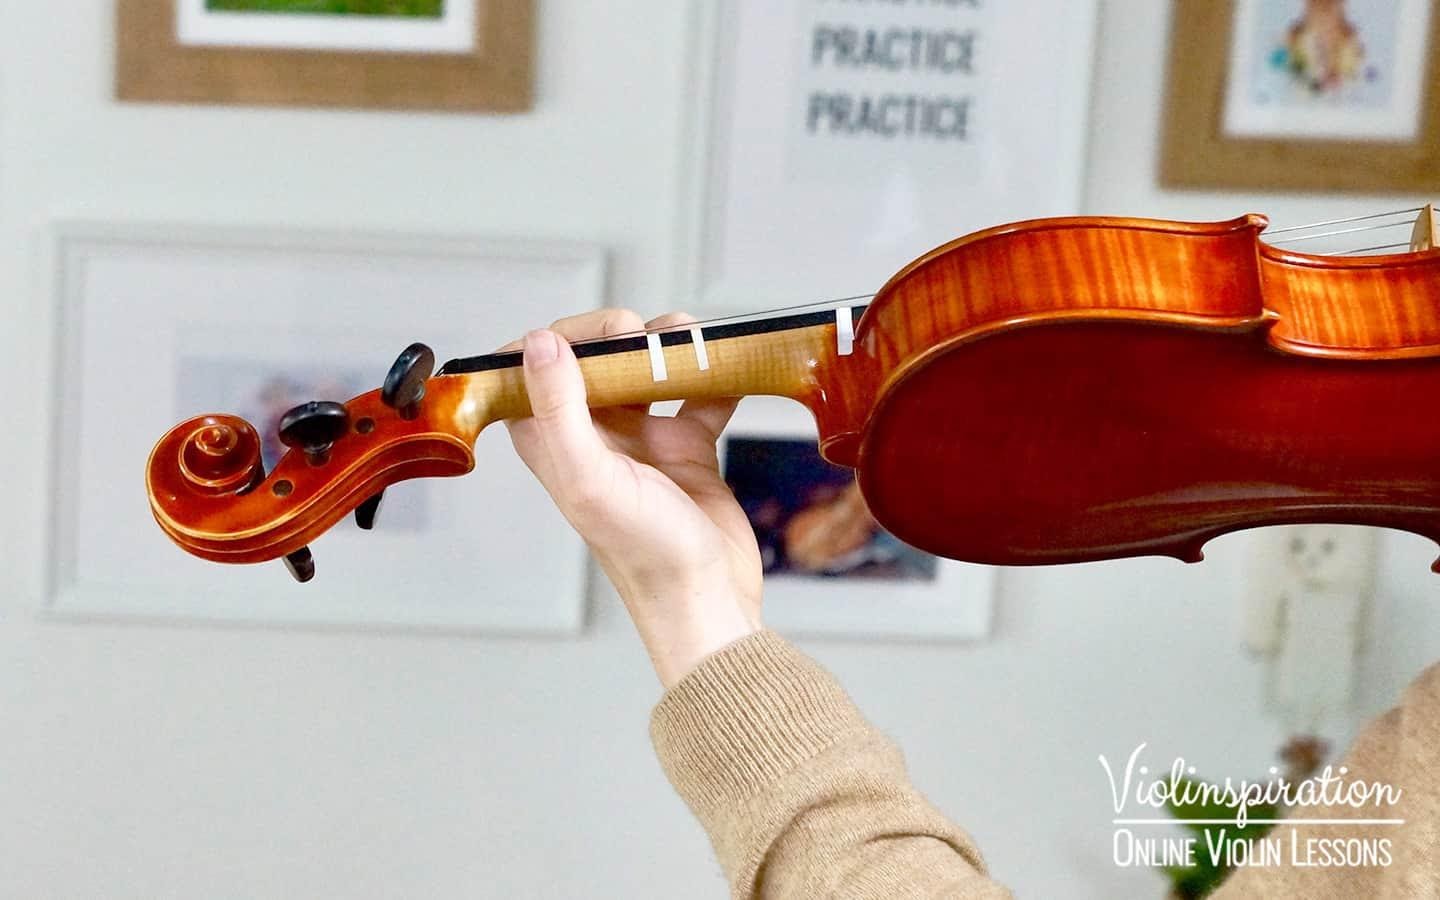 finger placement on violin - wrist position back